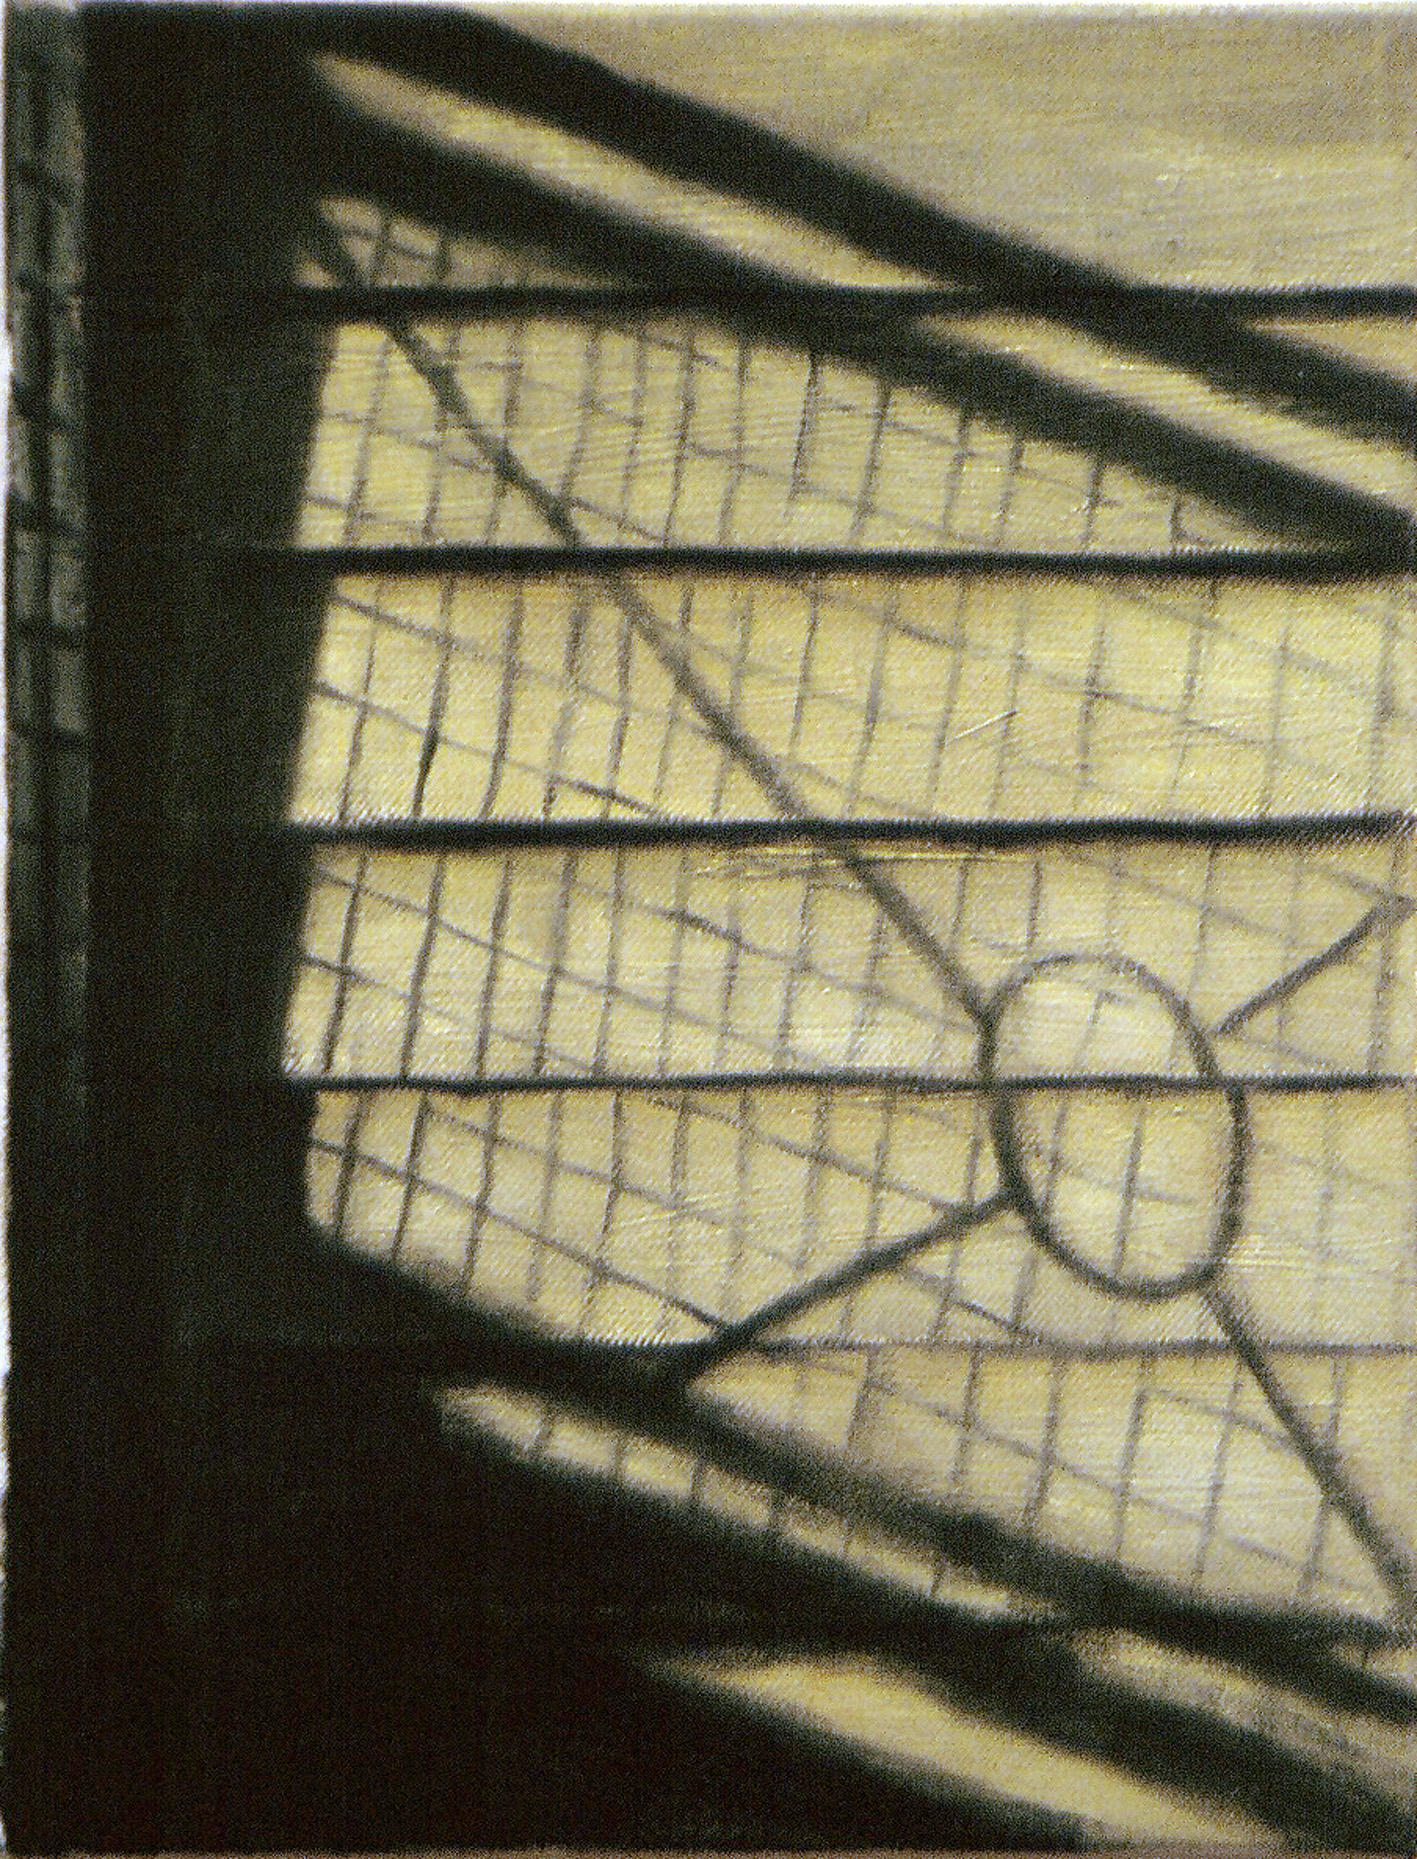   Exterior from Taivallahti  Oil on canvas  35 x 27 cm  2004 